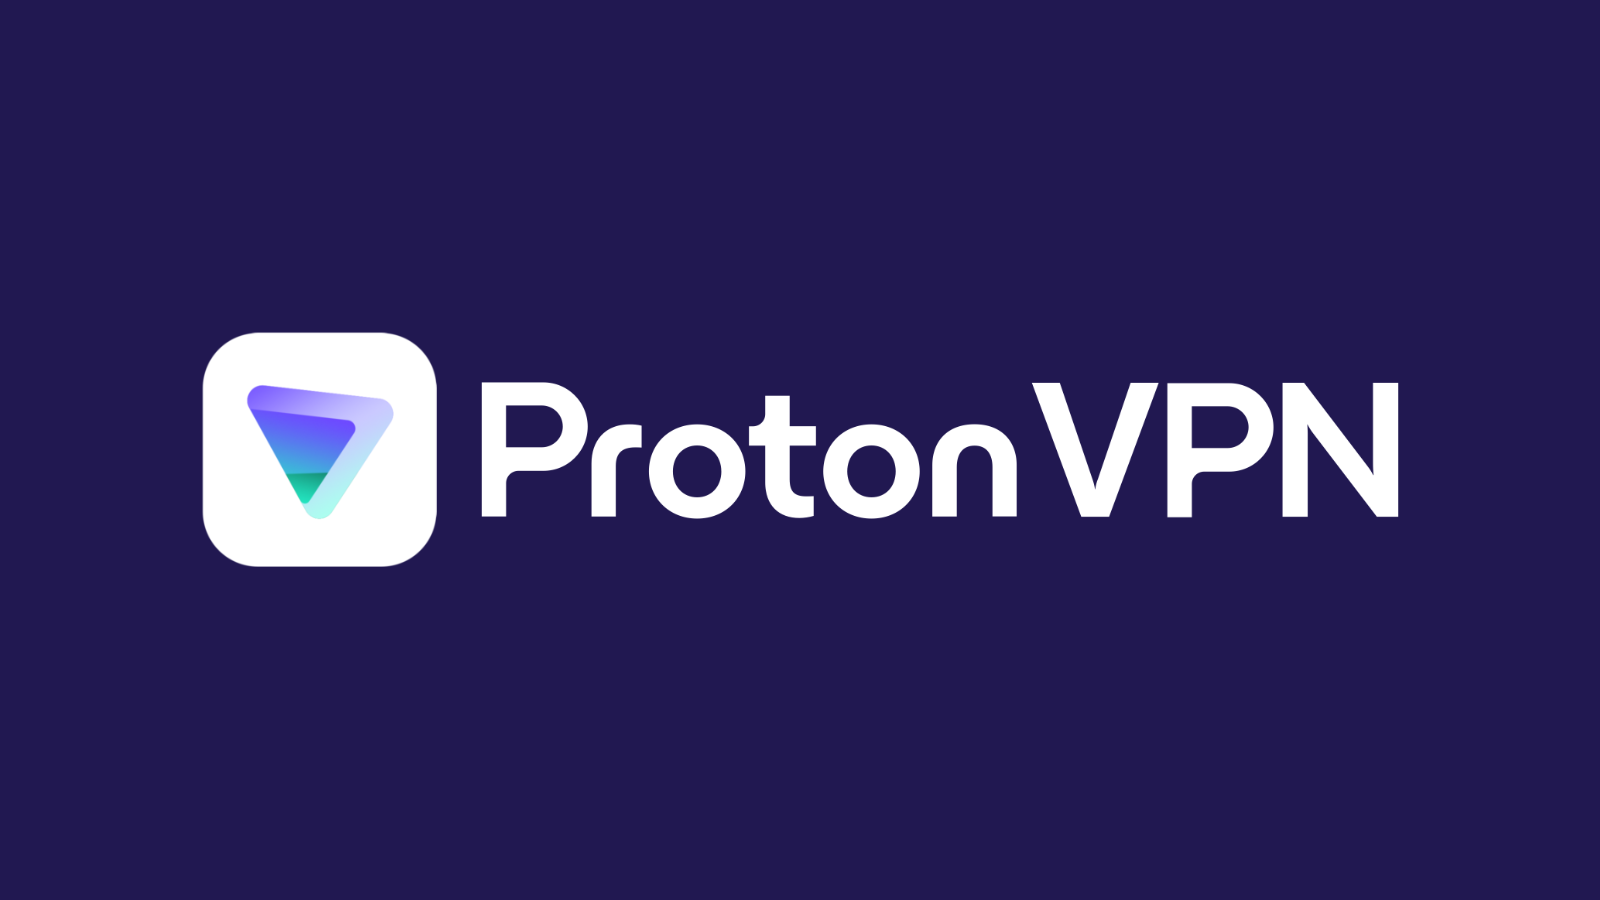 Https protonvpn. Протон впн. VPN Proton VPN. Протон впн лого. Proton VPN значок.